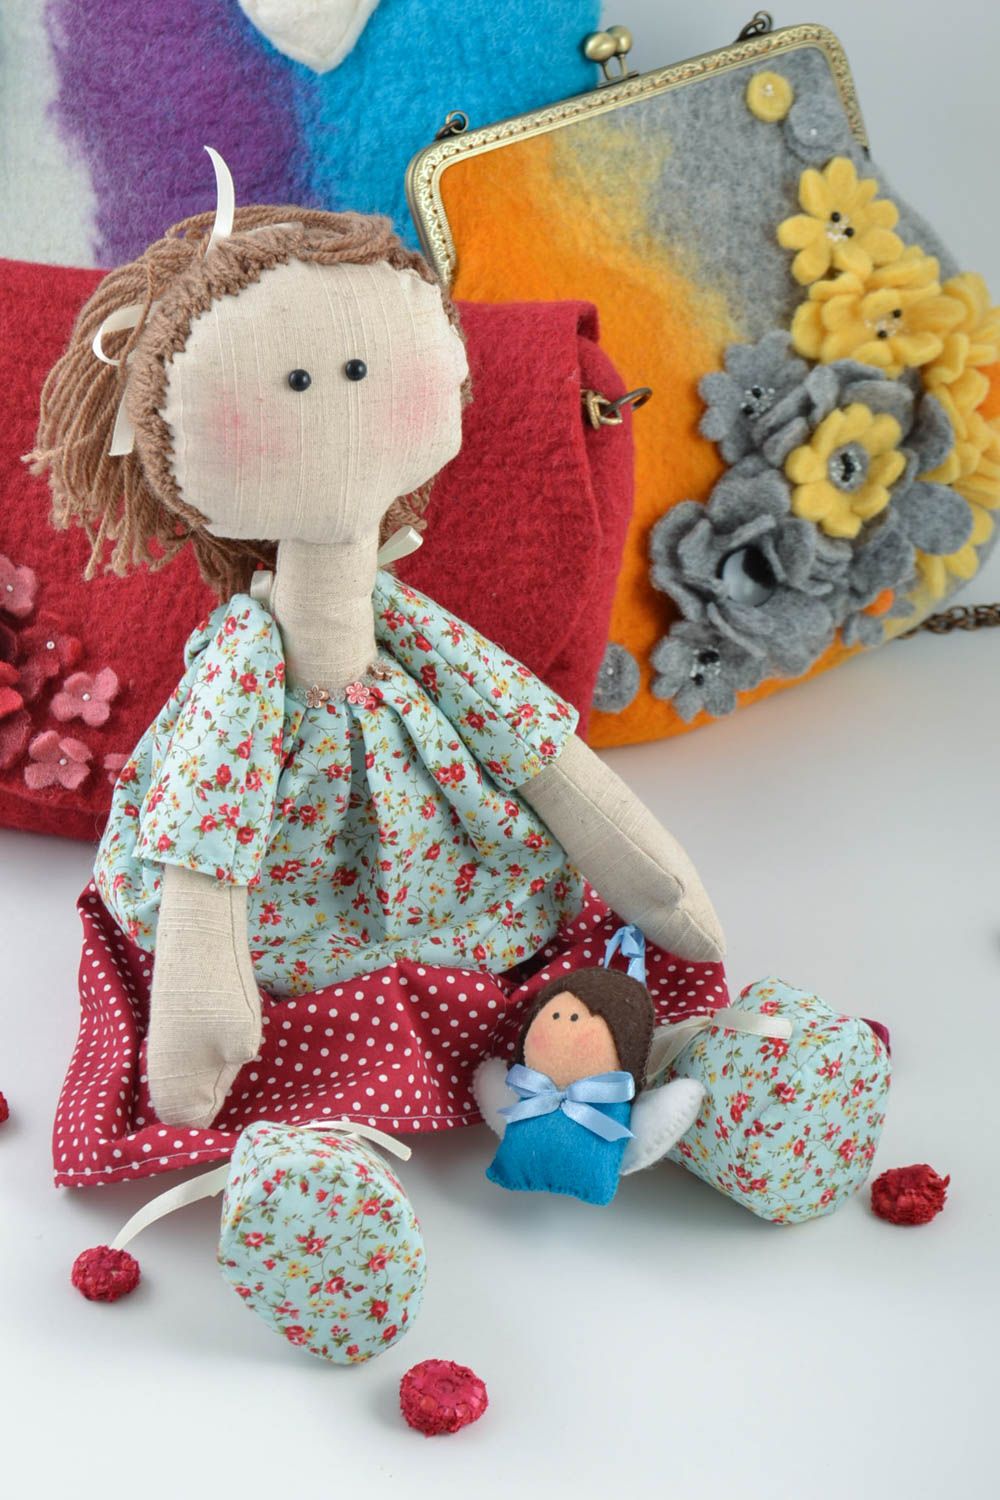 Unusual beautiful handmade fabric soft doll for children and interior decor photo 1